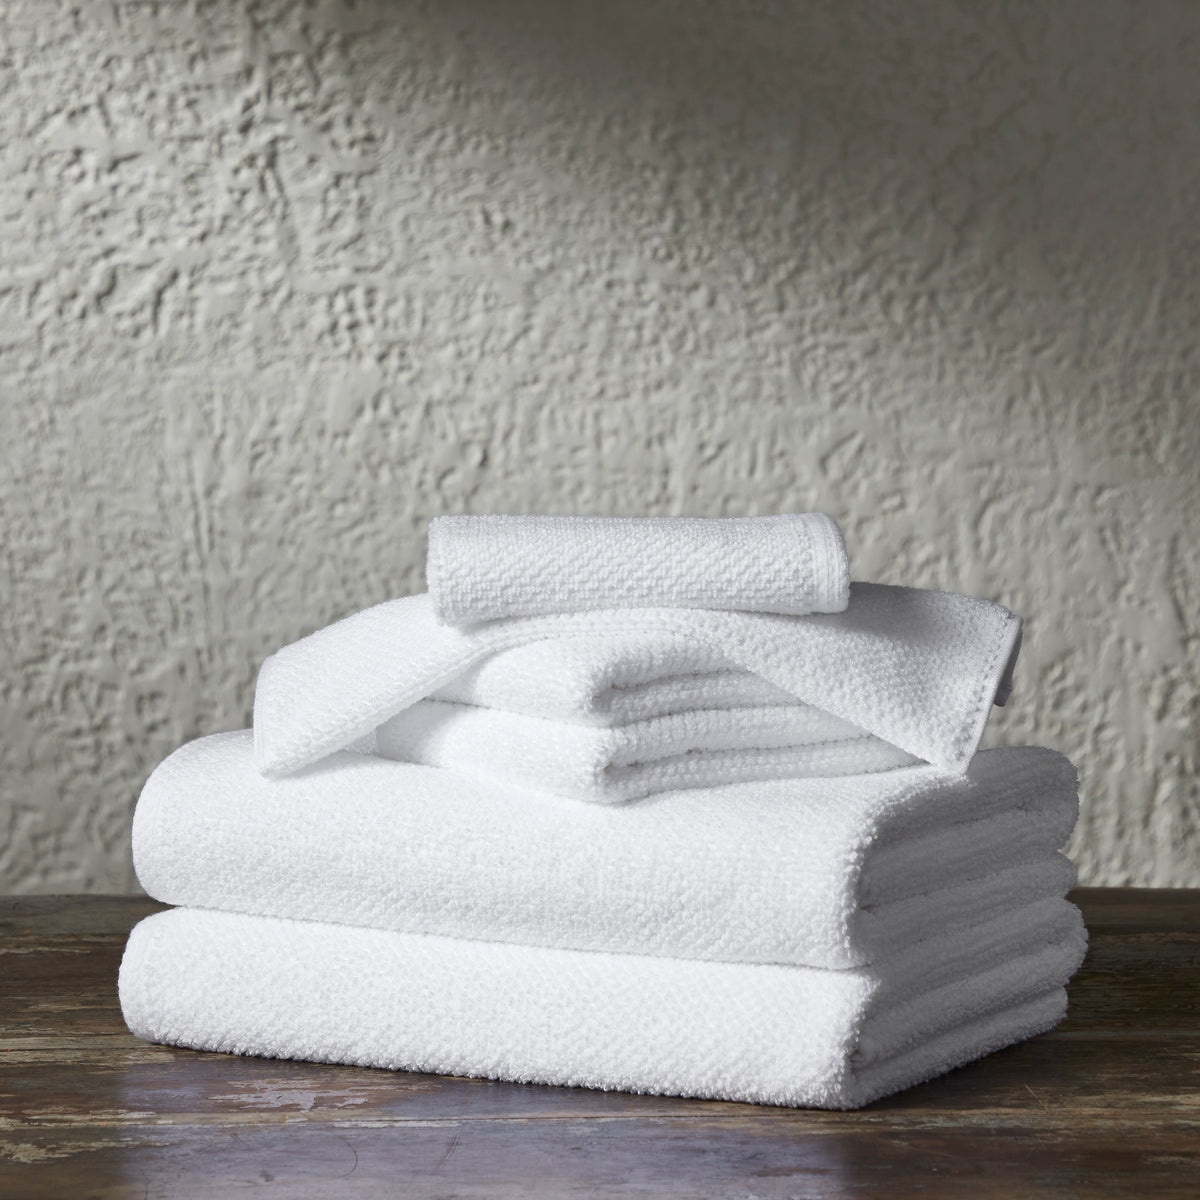 Luxurious Cotton Popcorn Textured Towel Set - Bed Bath & Beyond - 22836396